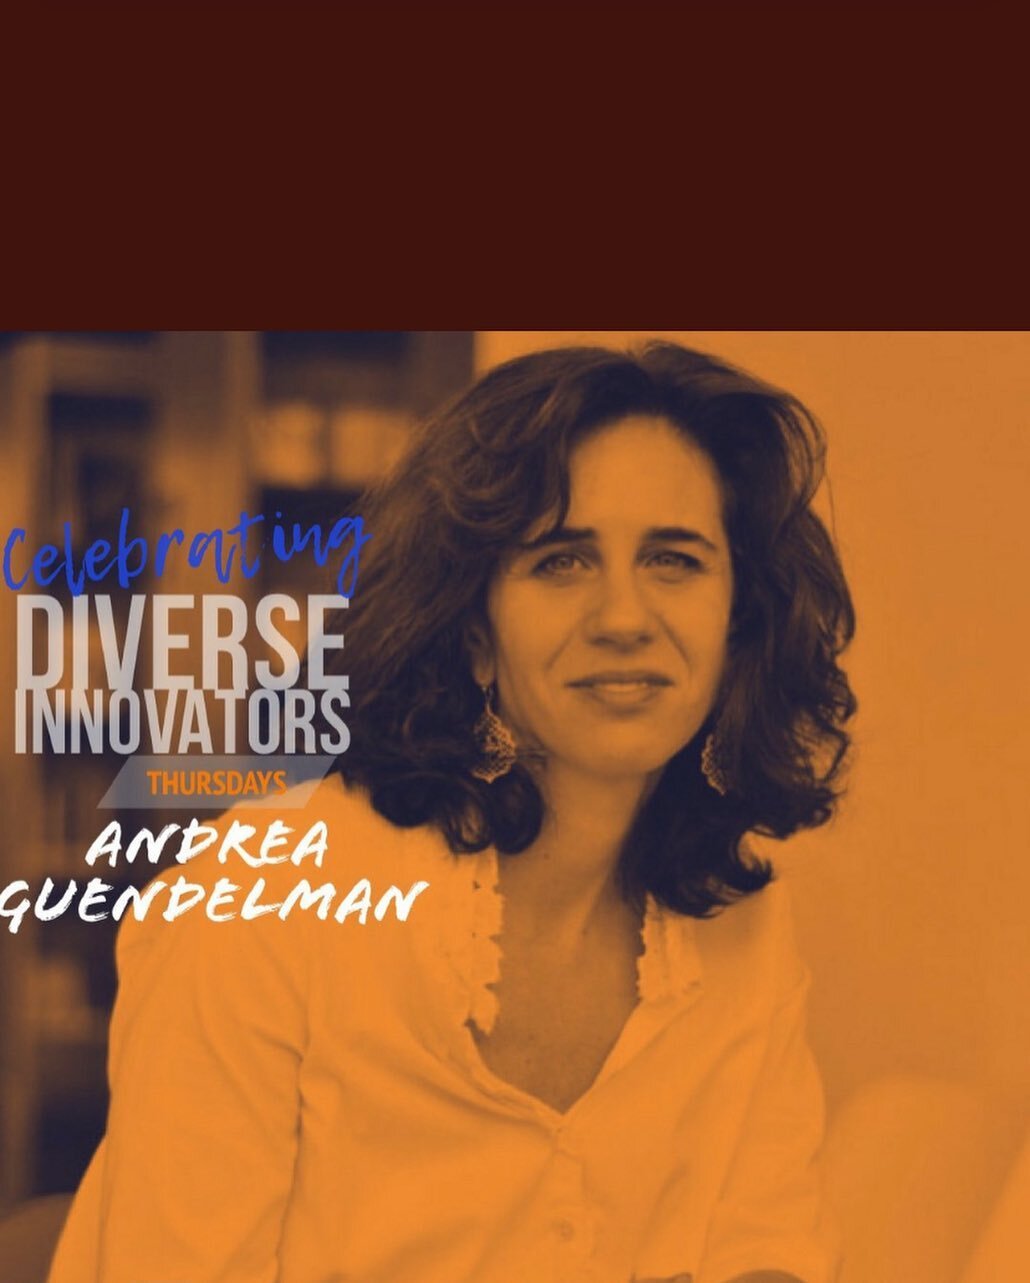 Meet @FutureofWomen the CEO &amp; Co-Founder of @BeVisible, the first career-focused social media platform for Latinx 

#UrbanGeekz #CelebratingDiverseInnovators #Thursdays #Latinx #LatinoinTech #BeVisible #Diversity #Inclusion #GirlBoss